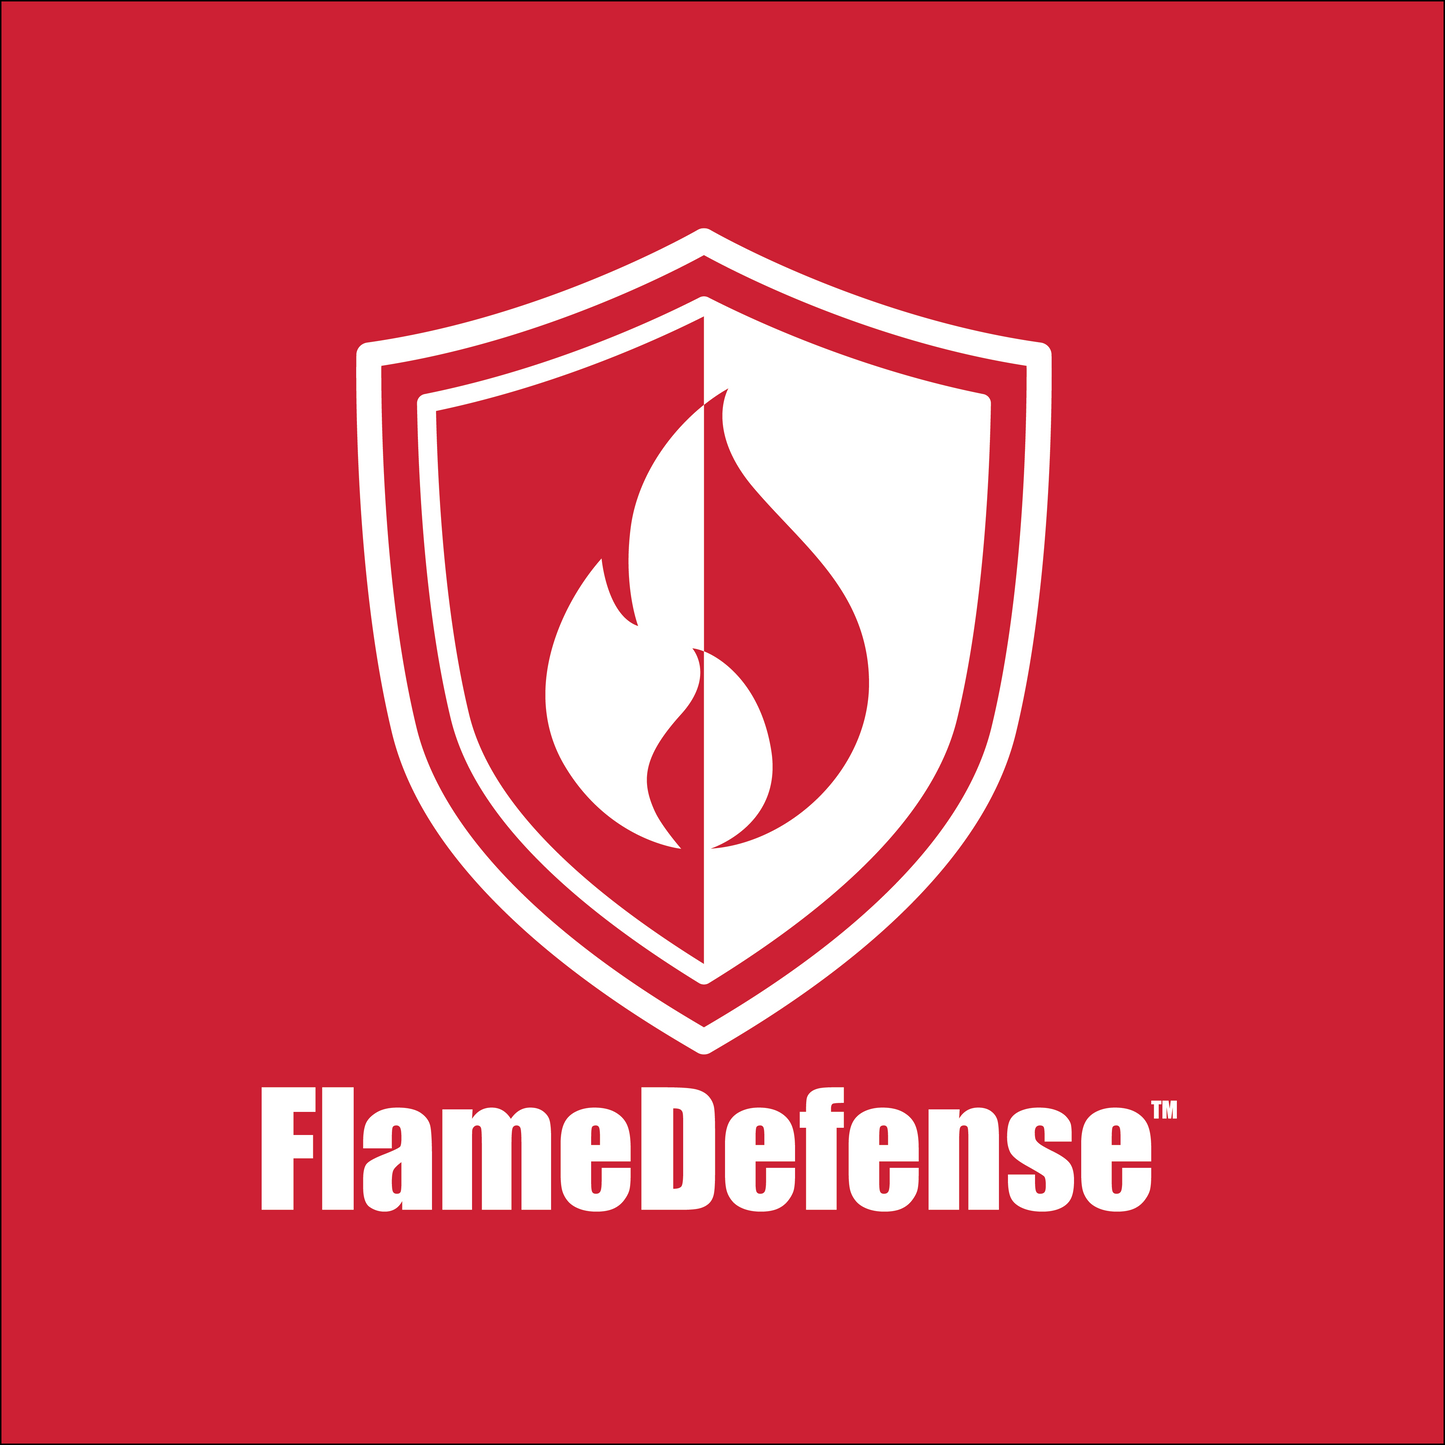 FIRE BLANKET - FLAME DEFENSE®